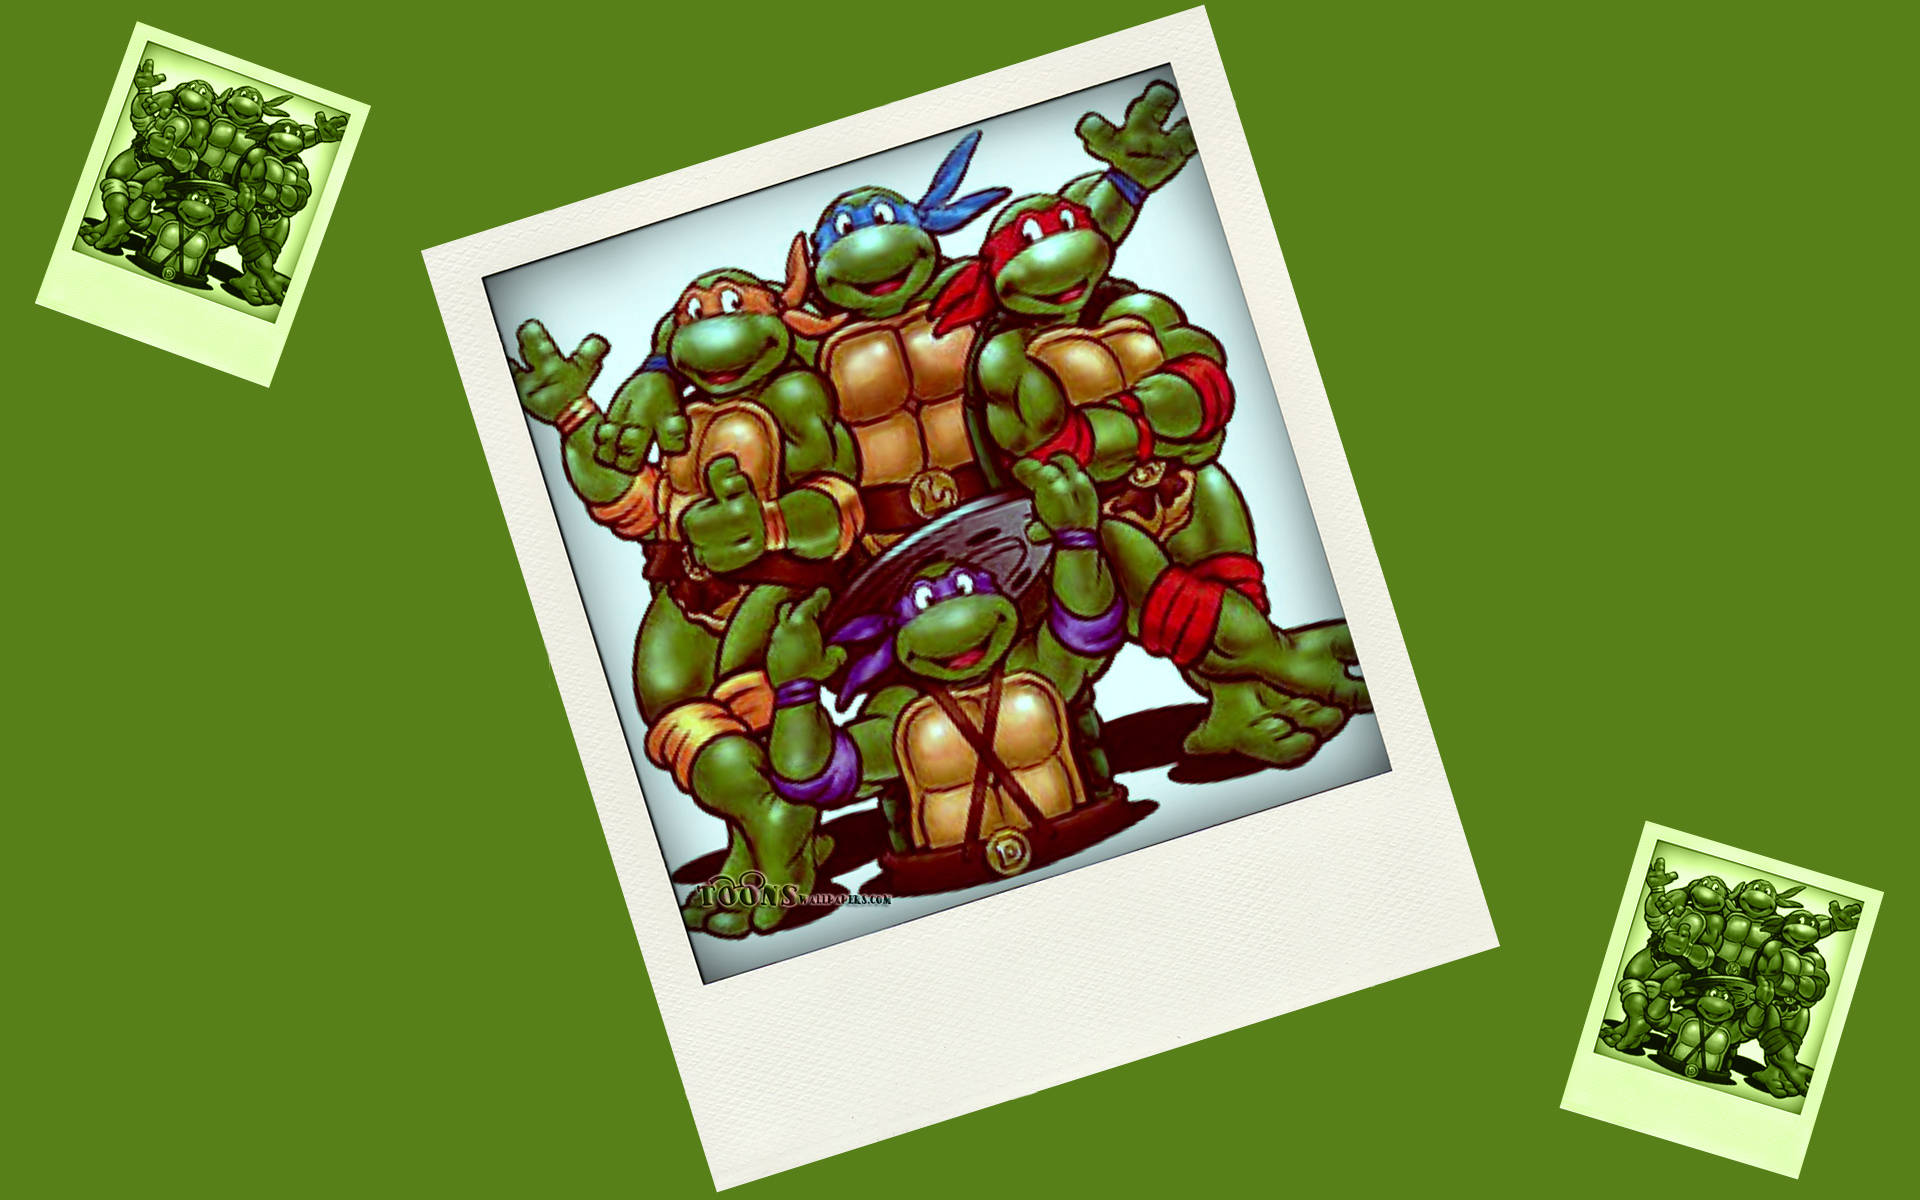 Top 999+ Ninja Turtle Wallpaper Full HD, 4K✅Free to Use